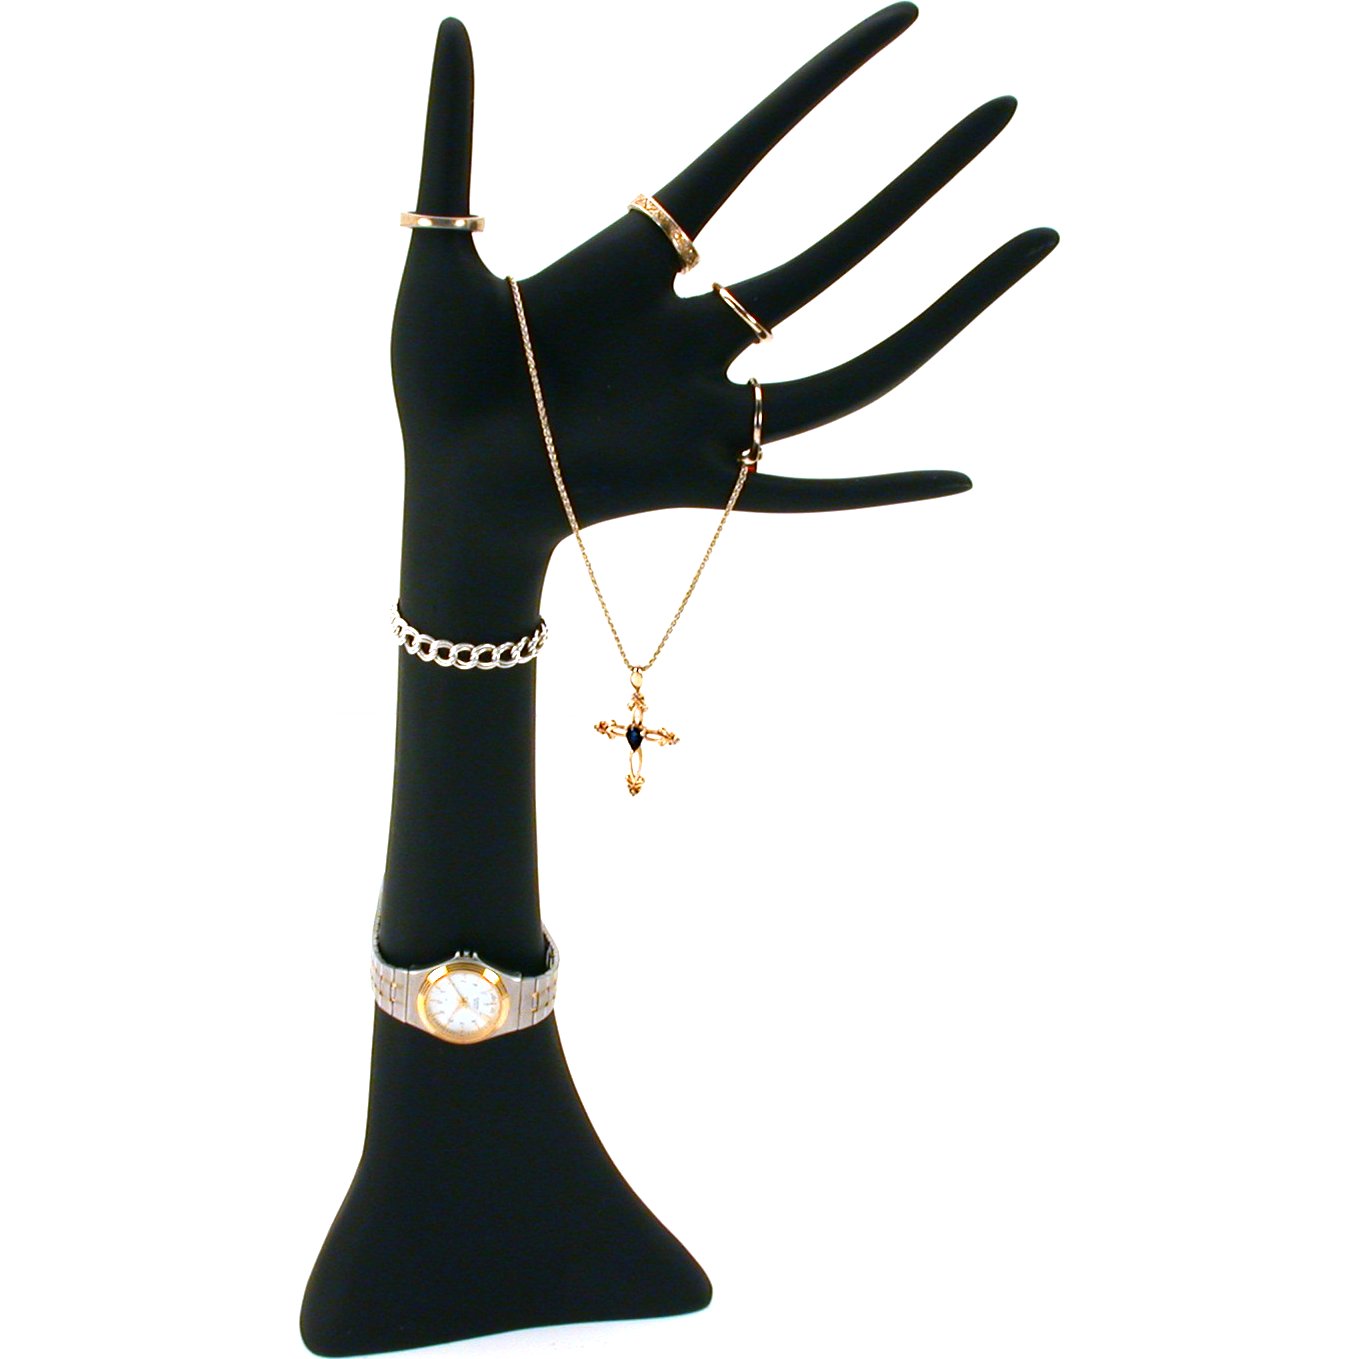 2 Black Jewelry Hand Displays